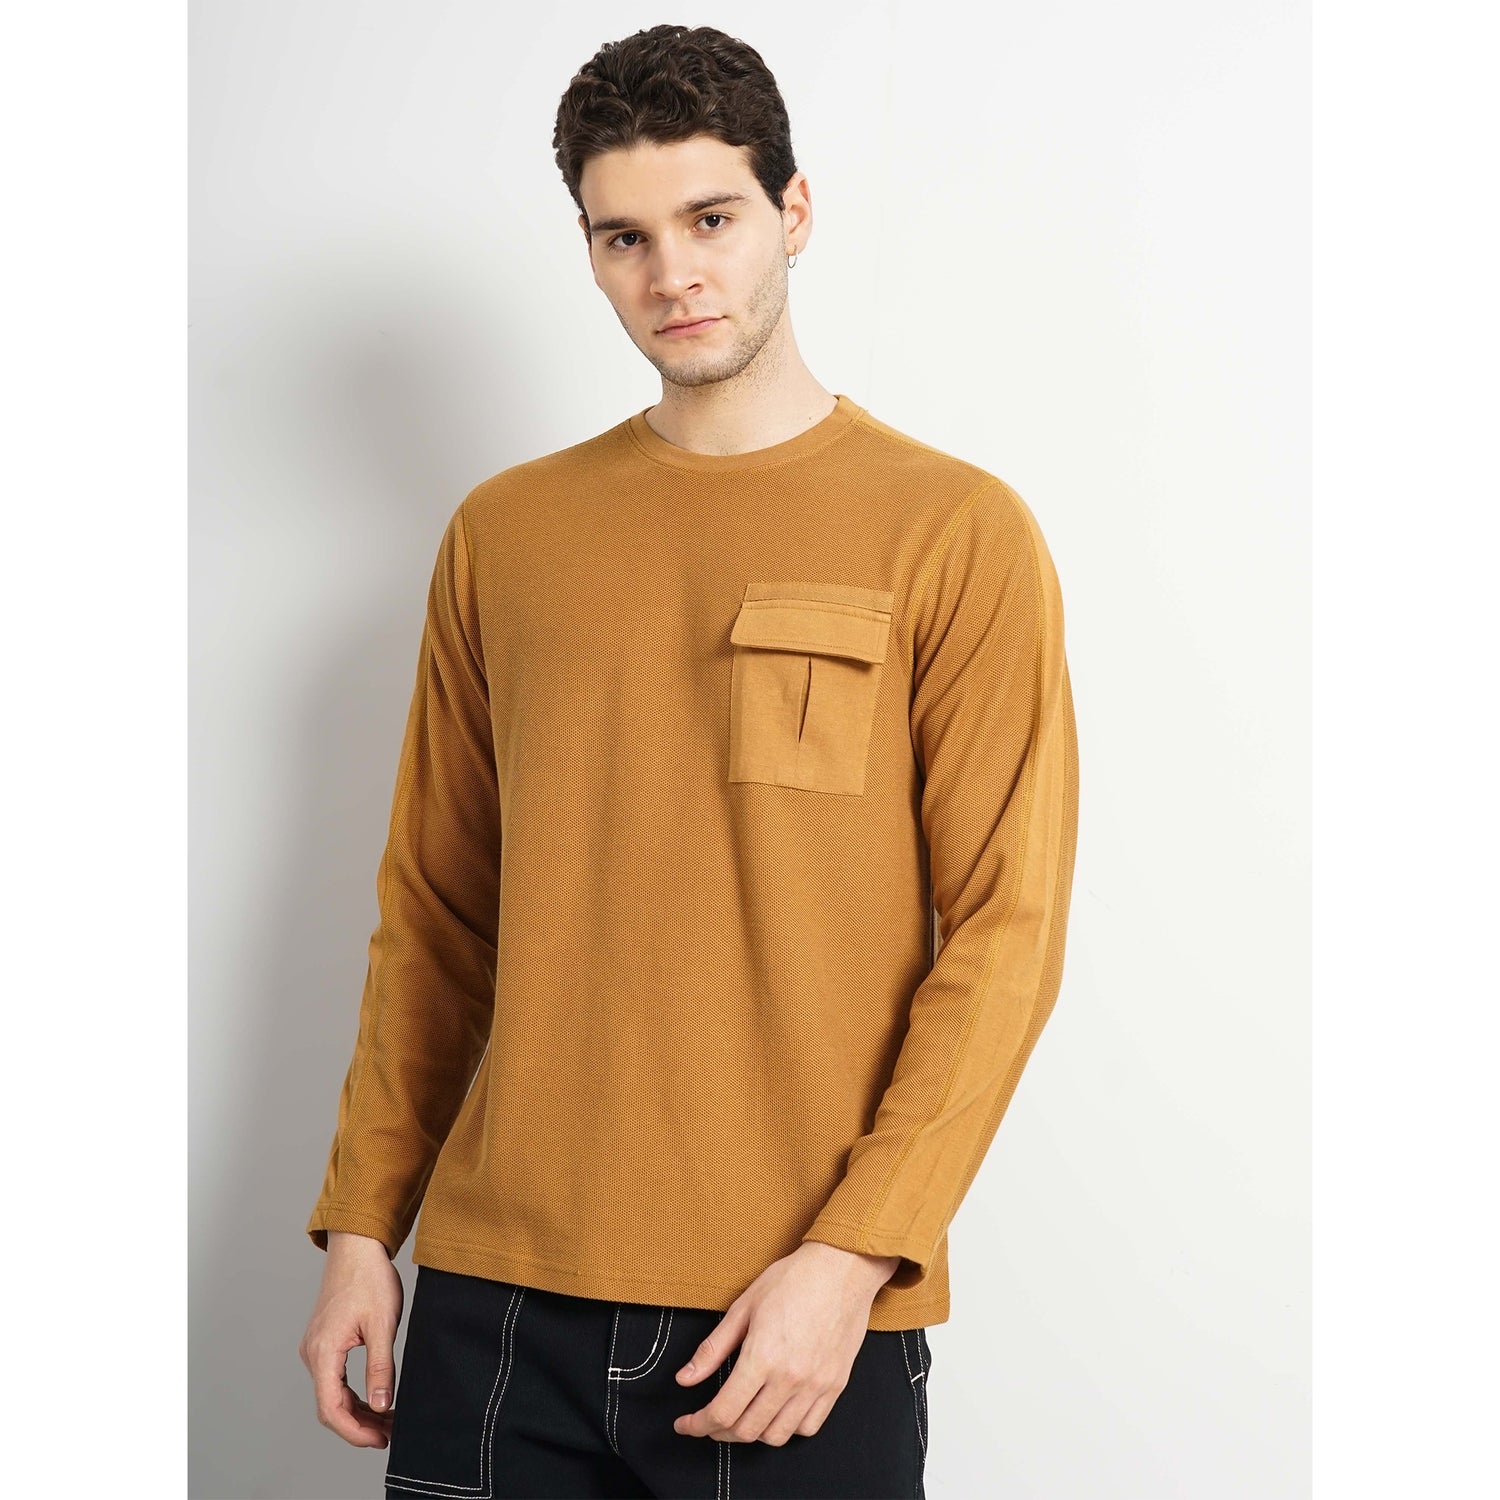 Men Brown Solid Regular Fit Fashion Cotton Textured Tshirt (GELONG)